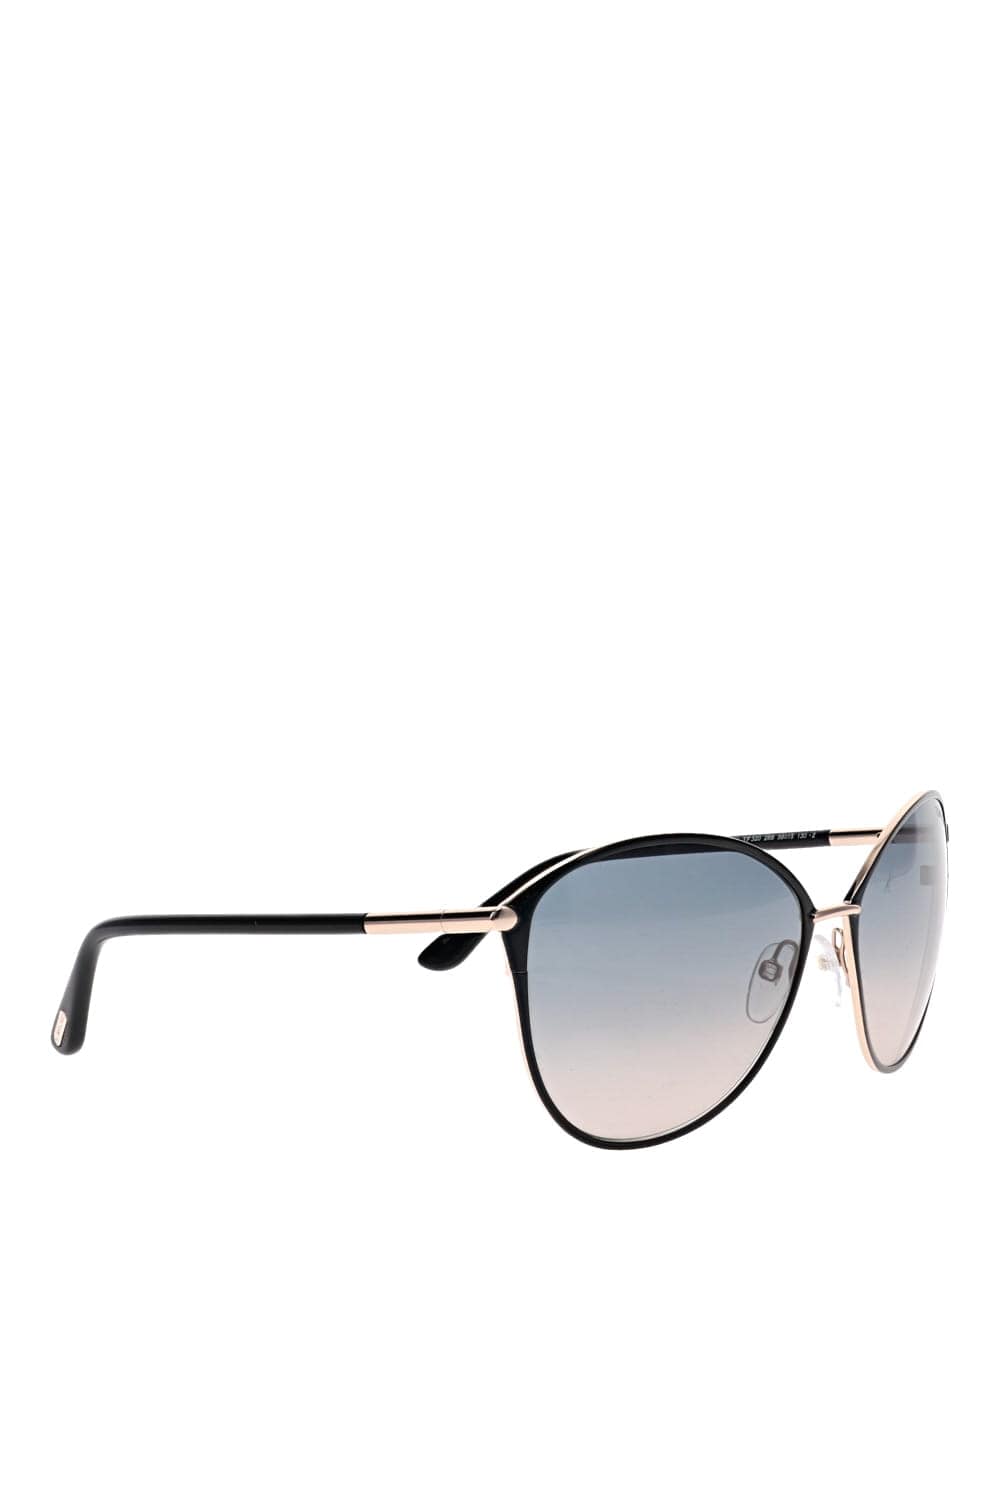 Tom Ford Eyewear FT0320 Shiny Black Sunglasses FT0320 Black/Smoke